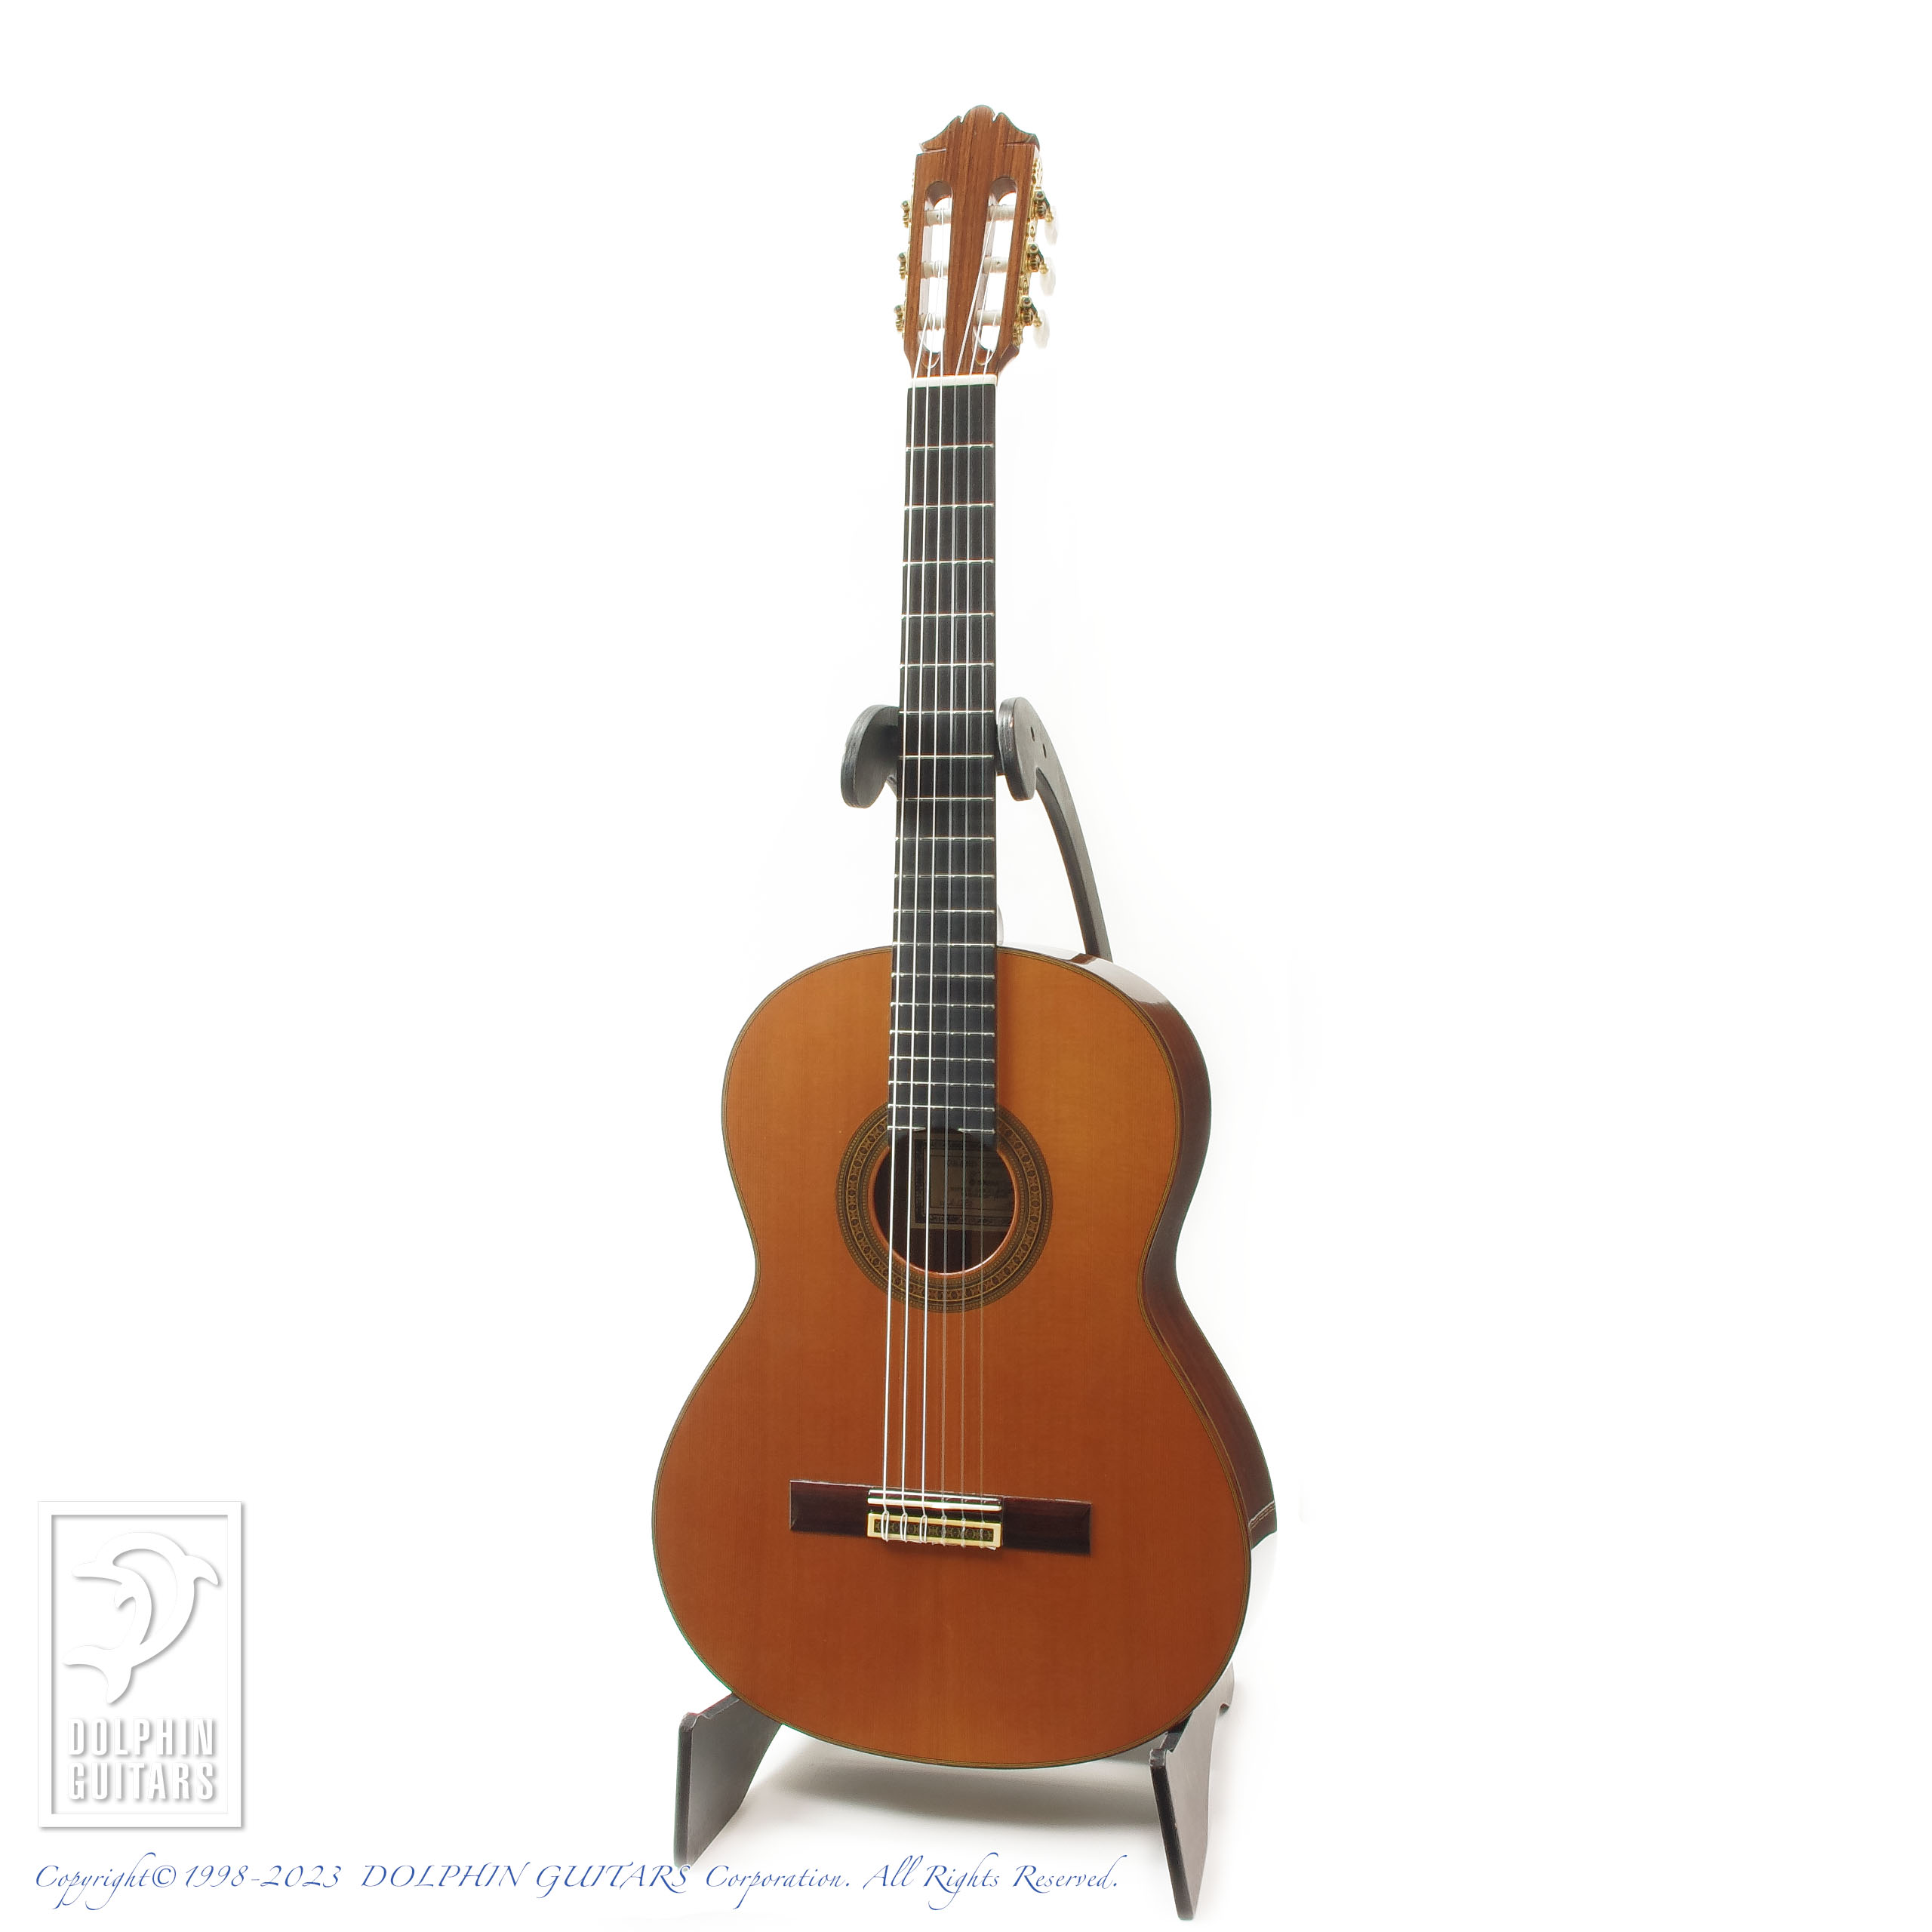 YAMAHA GC-7 杉 (Nylon Strings)|ドルフィンギターズ